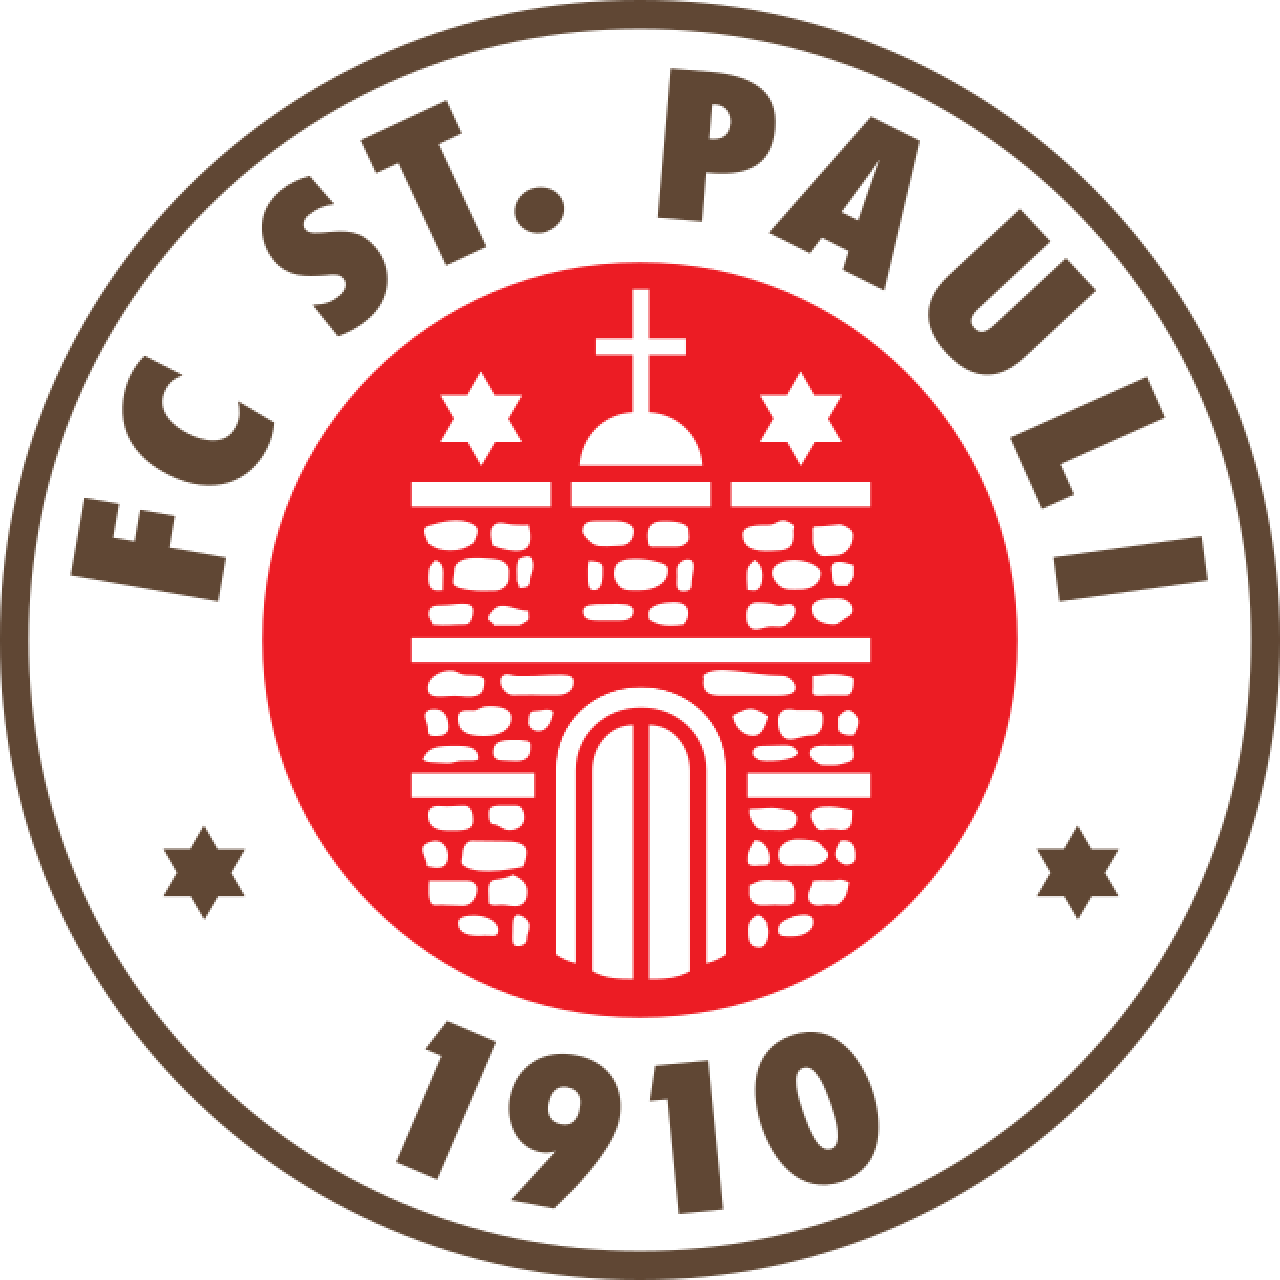 St. Pauli confirm departure of leading goal-scorer